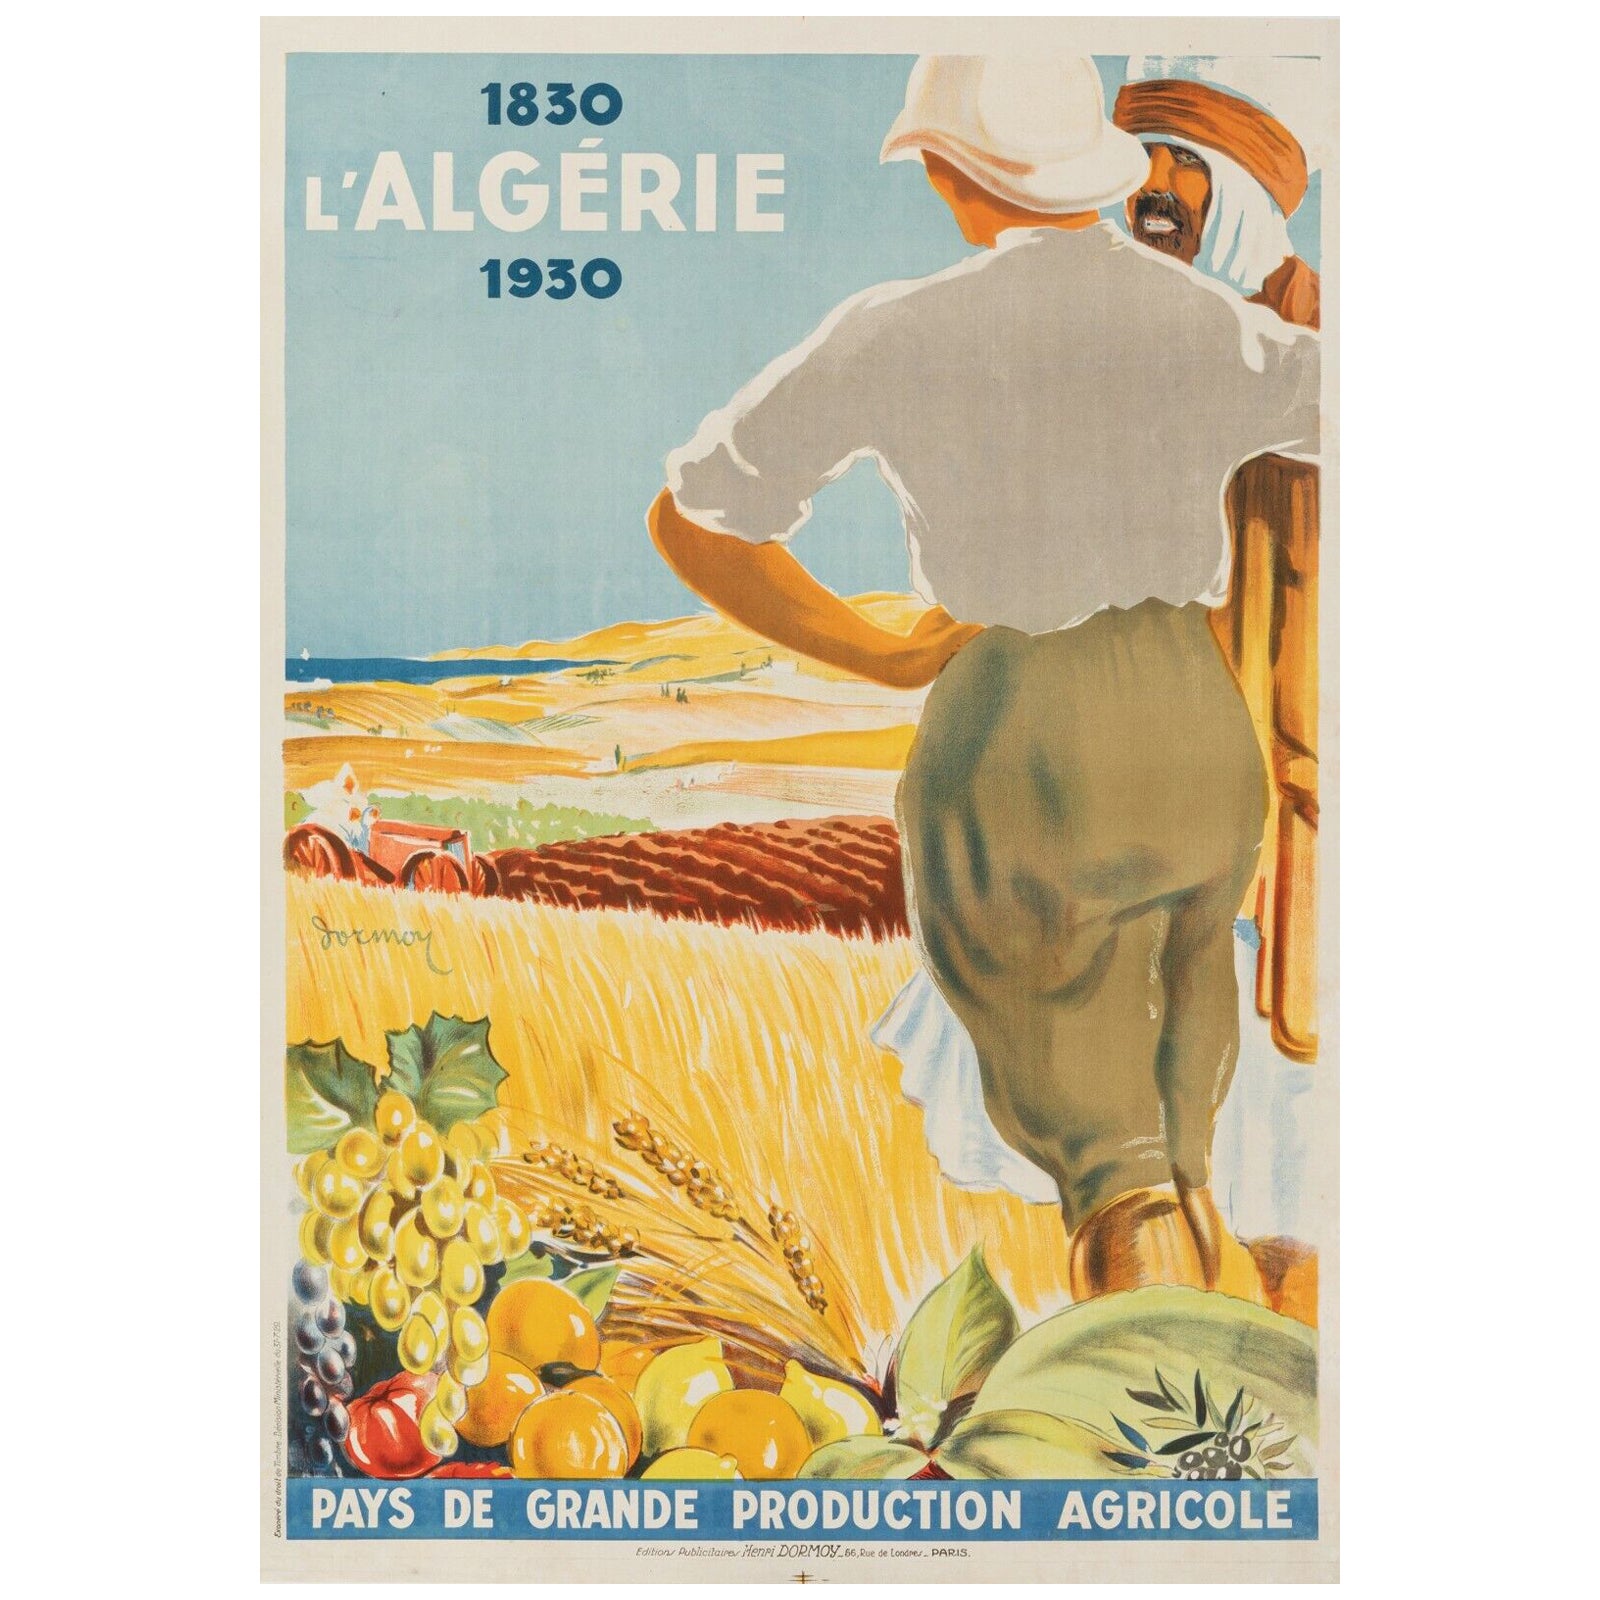 Original Colonial Poster-Dormoy-Algeria 1830 1930-Farmland, 1930